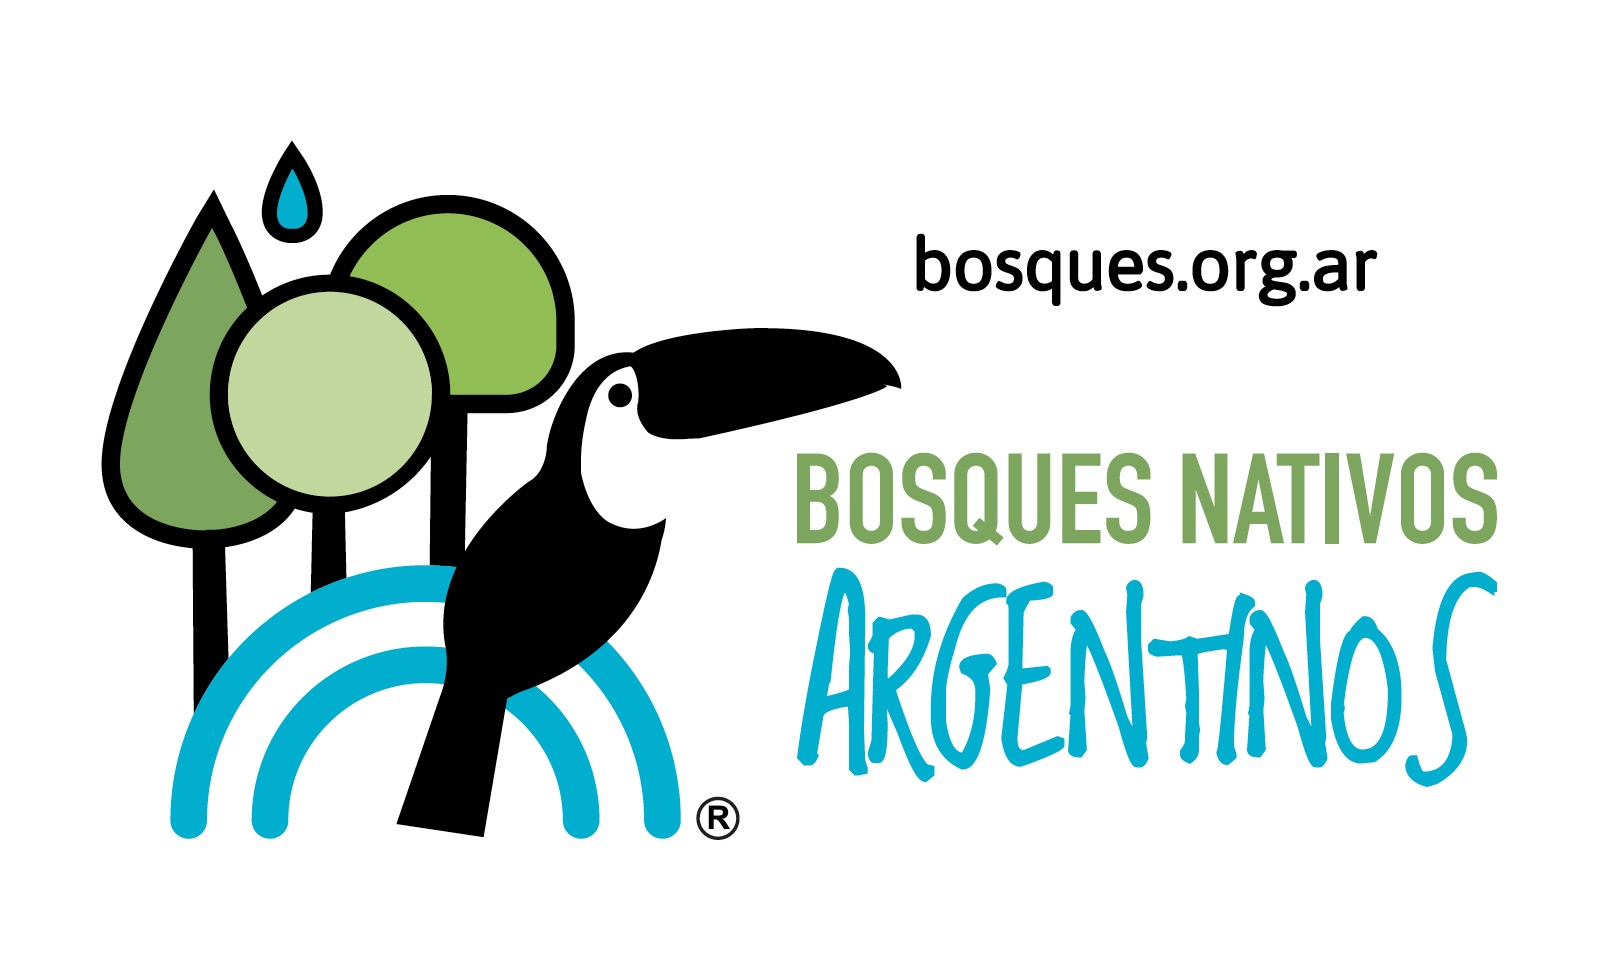 (c) Bosques.org.ar